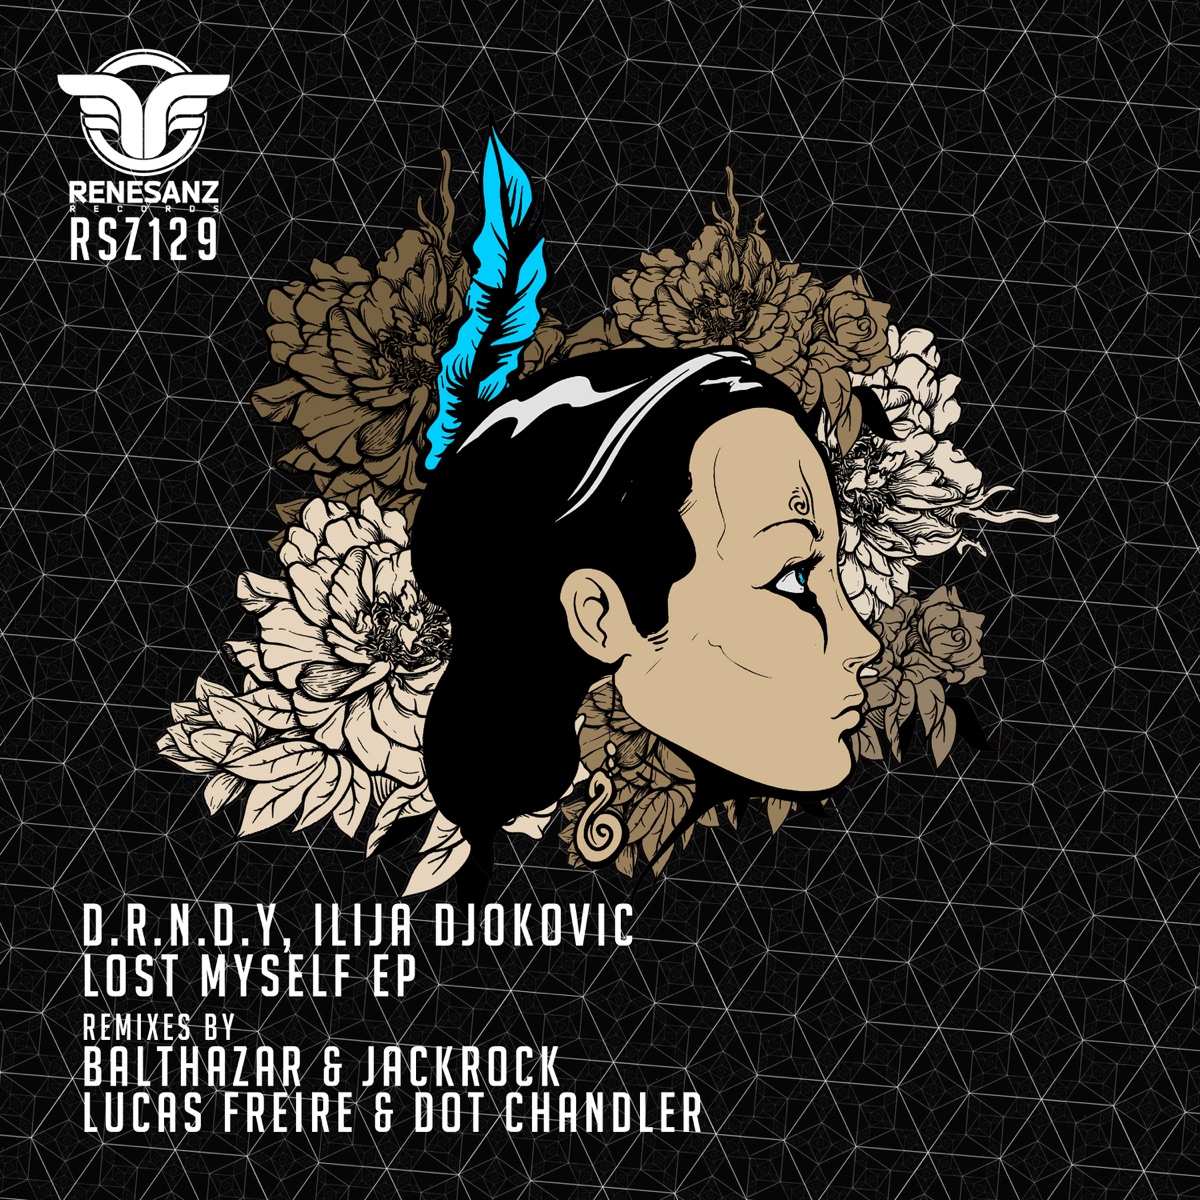 Enigma - EP by Ilija Djokovic on Apple Music